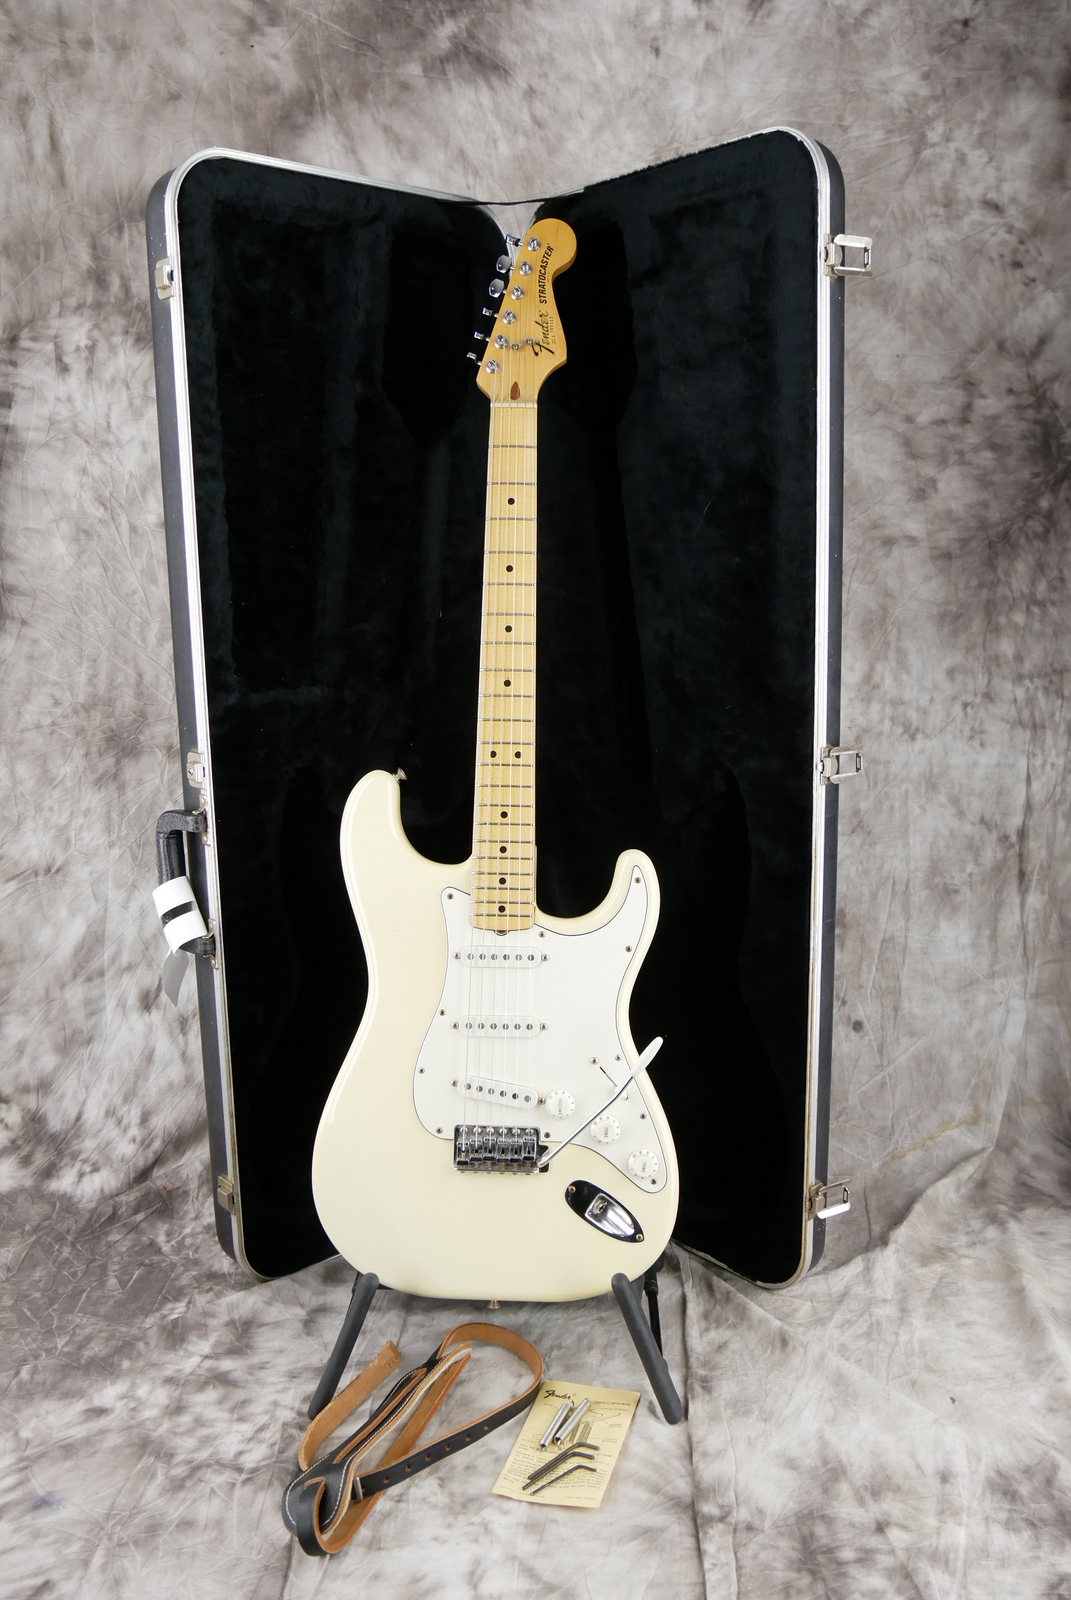 img/vintage/5303/Fender_Stratocaster_Dan_smith_1982_tremolo_hardcase-013.JPG